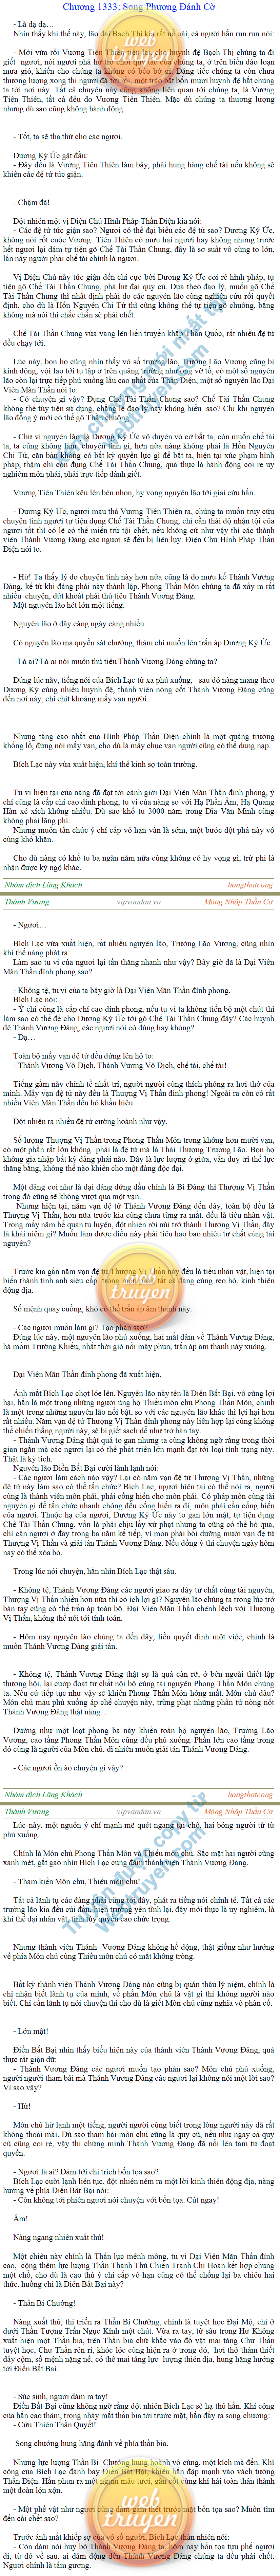 Thanh-vuong-1333.png